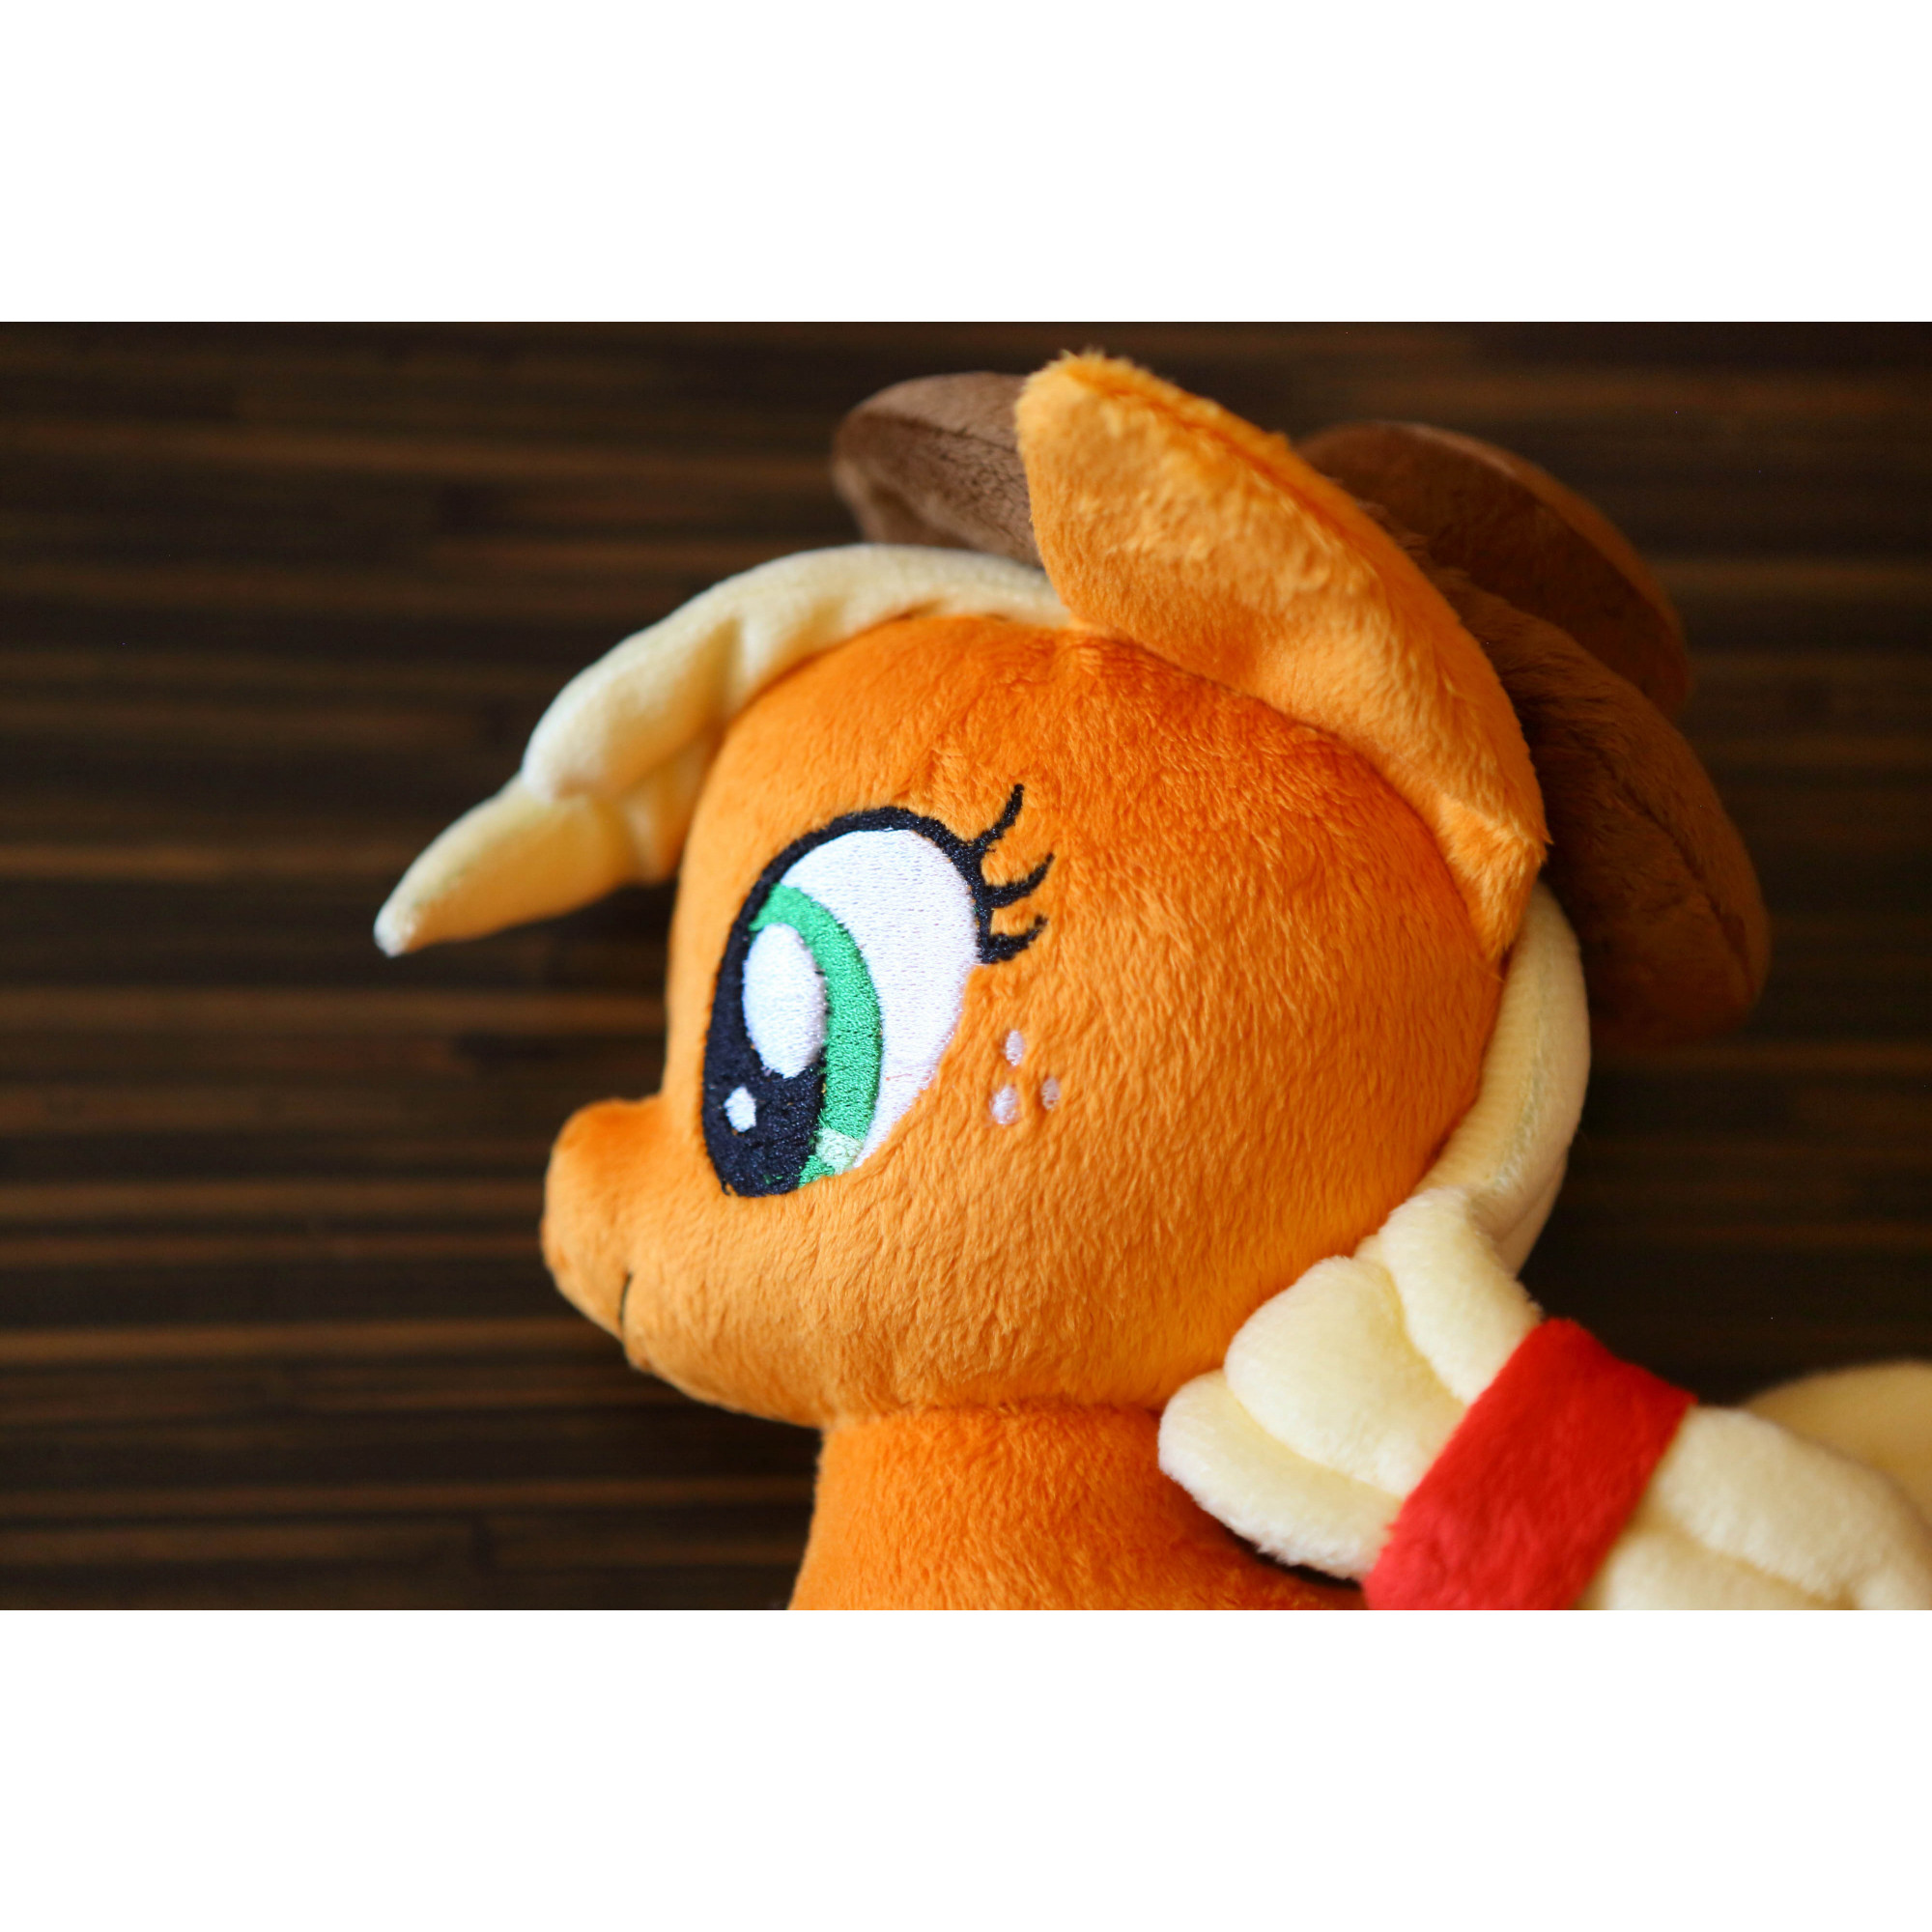 Buy Hand-Sewn Plush Stuffed Toy Applejack Pony